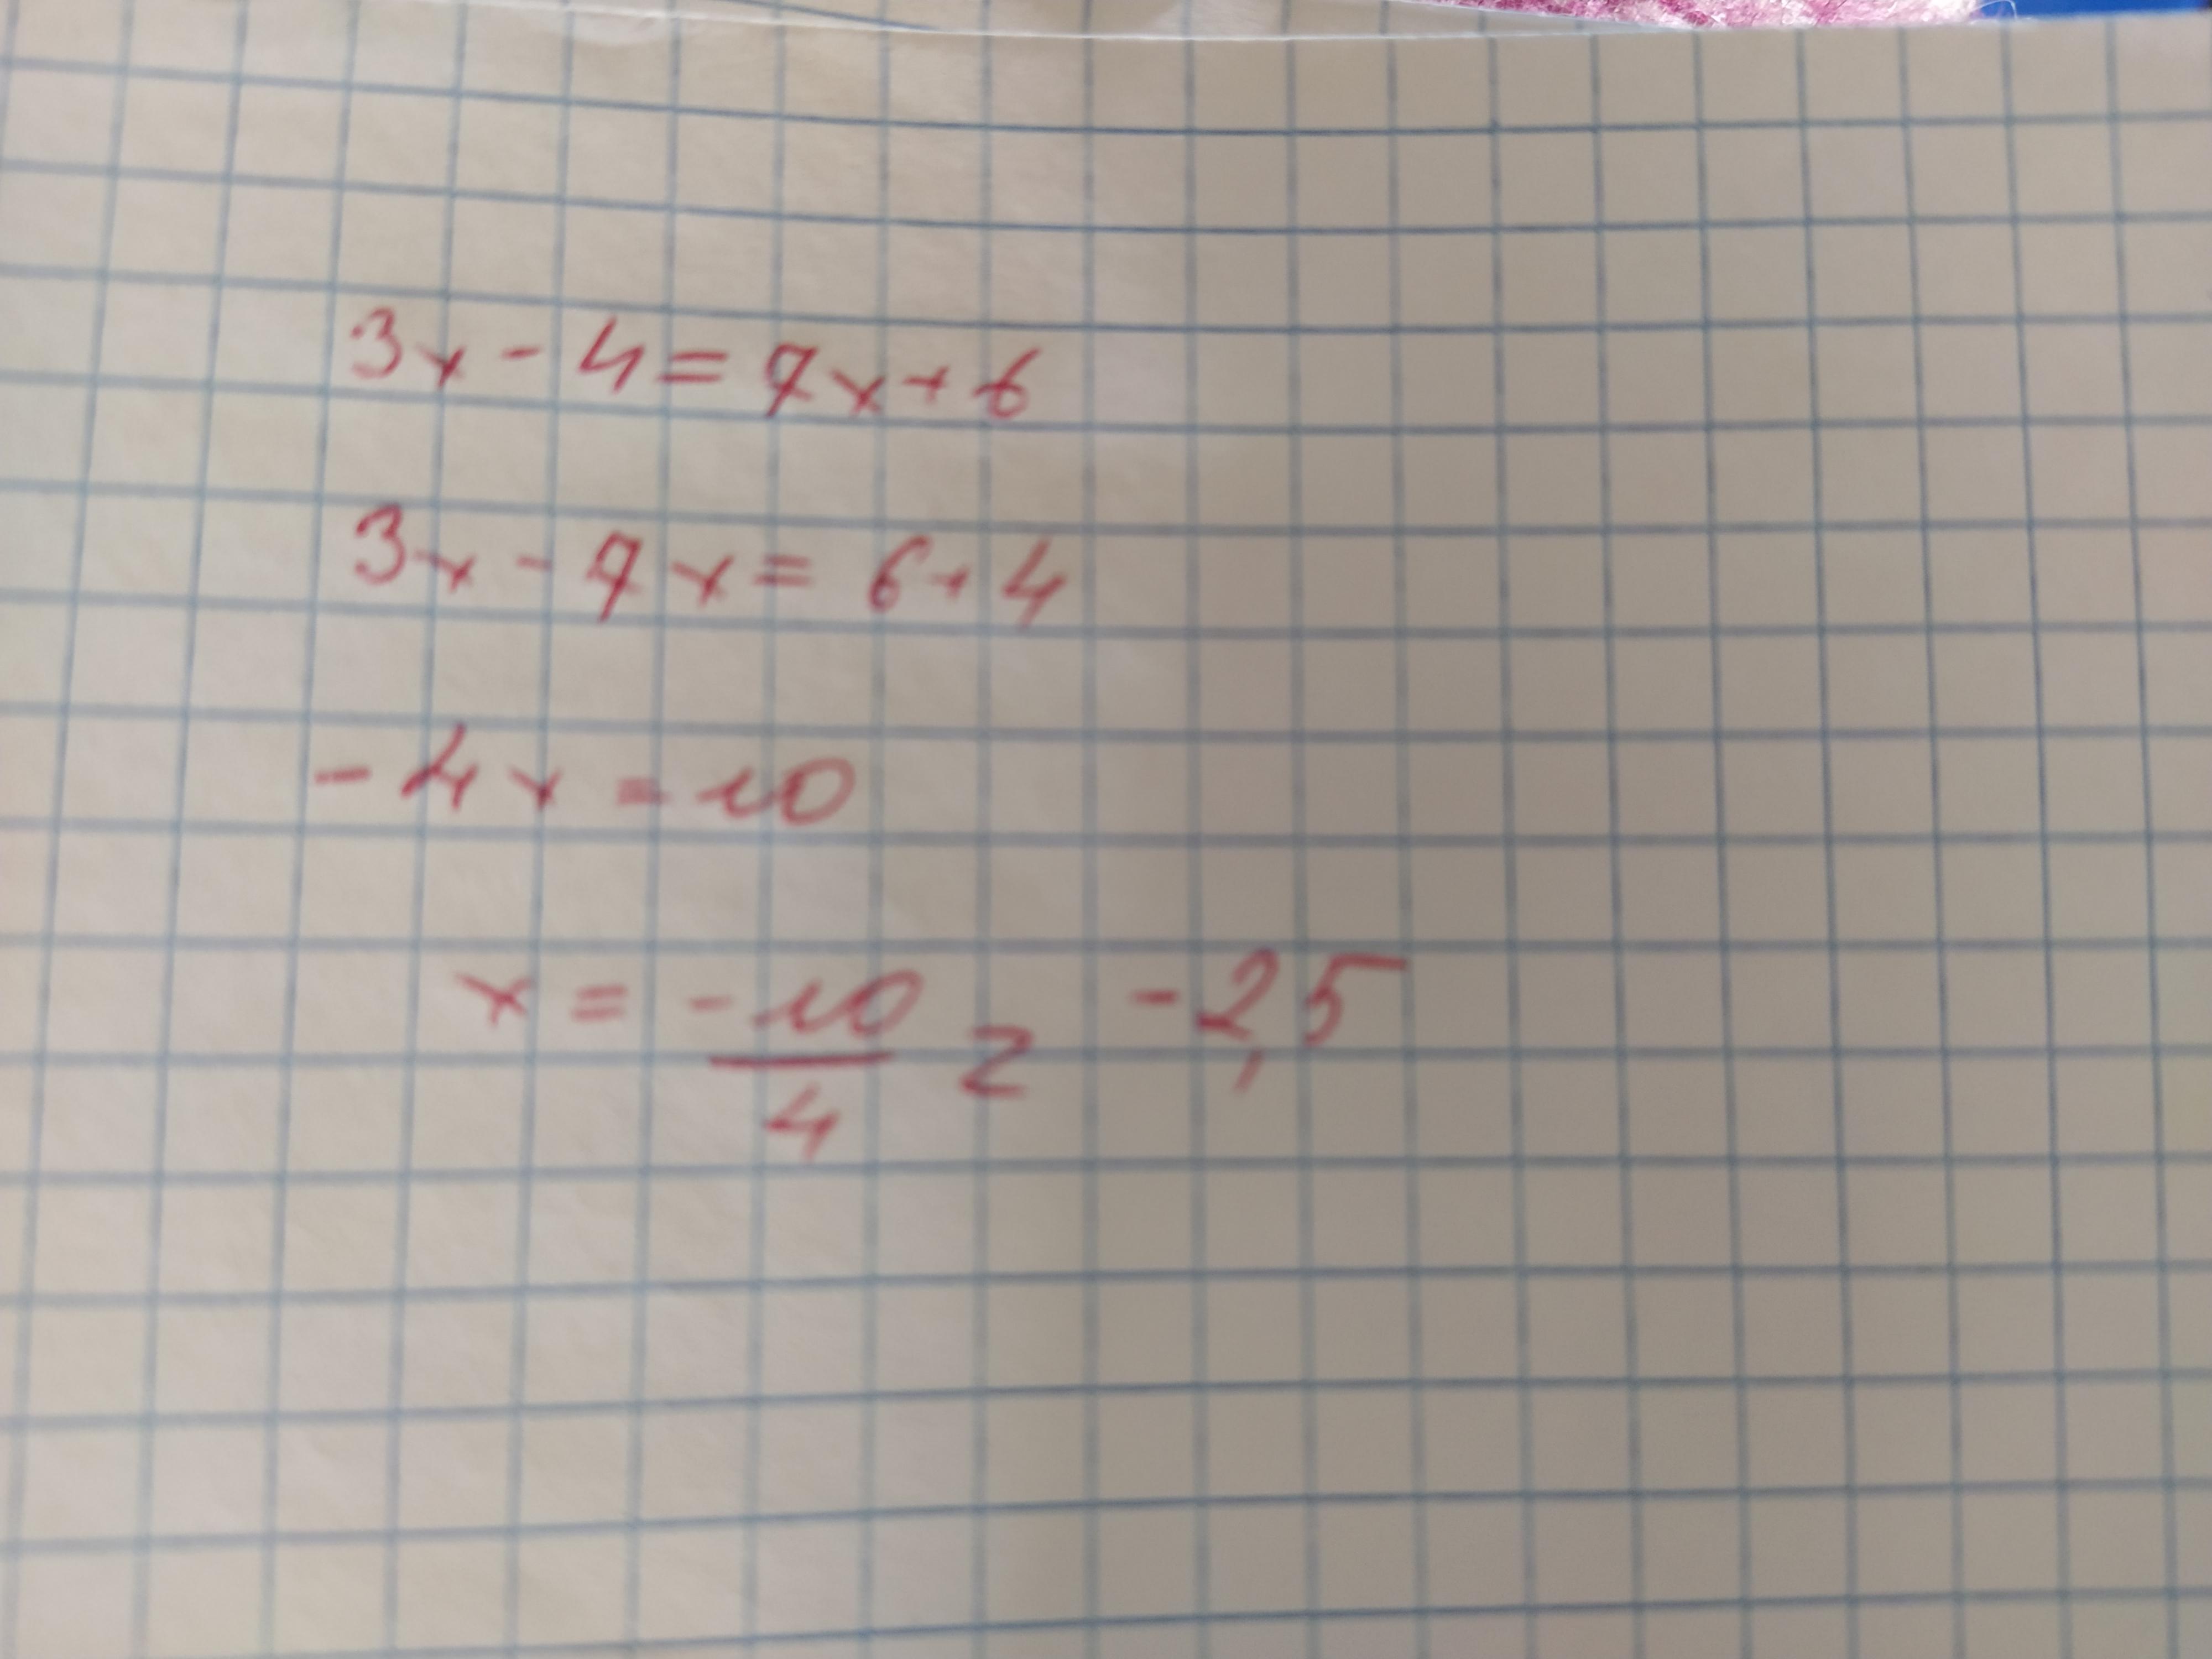 3 x7 x3. При каких значениях x. При каких значениях x значения выражений равны. X^3-7x+6. 6 На 6 равно.